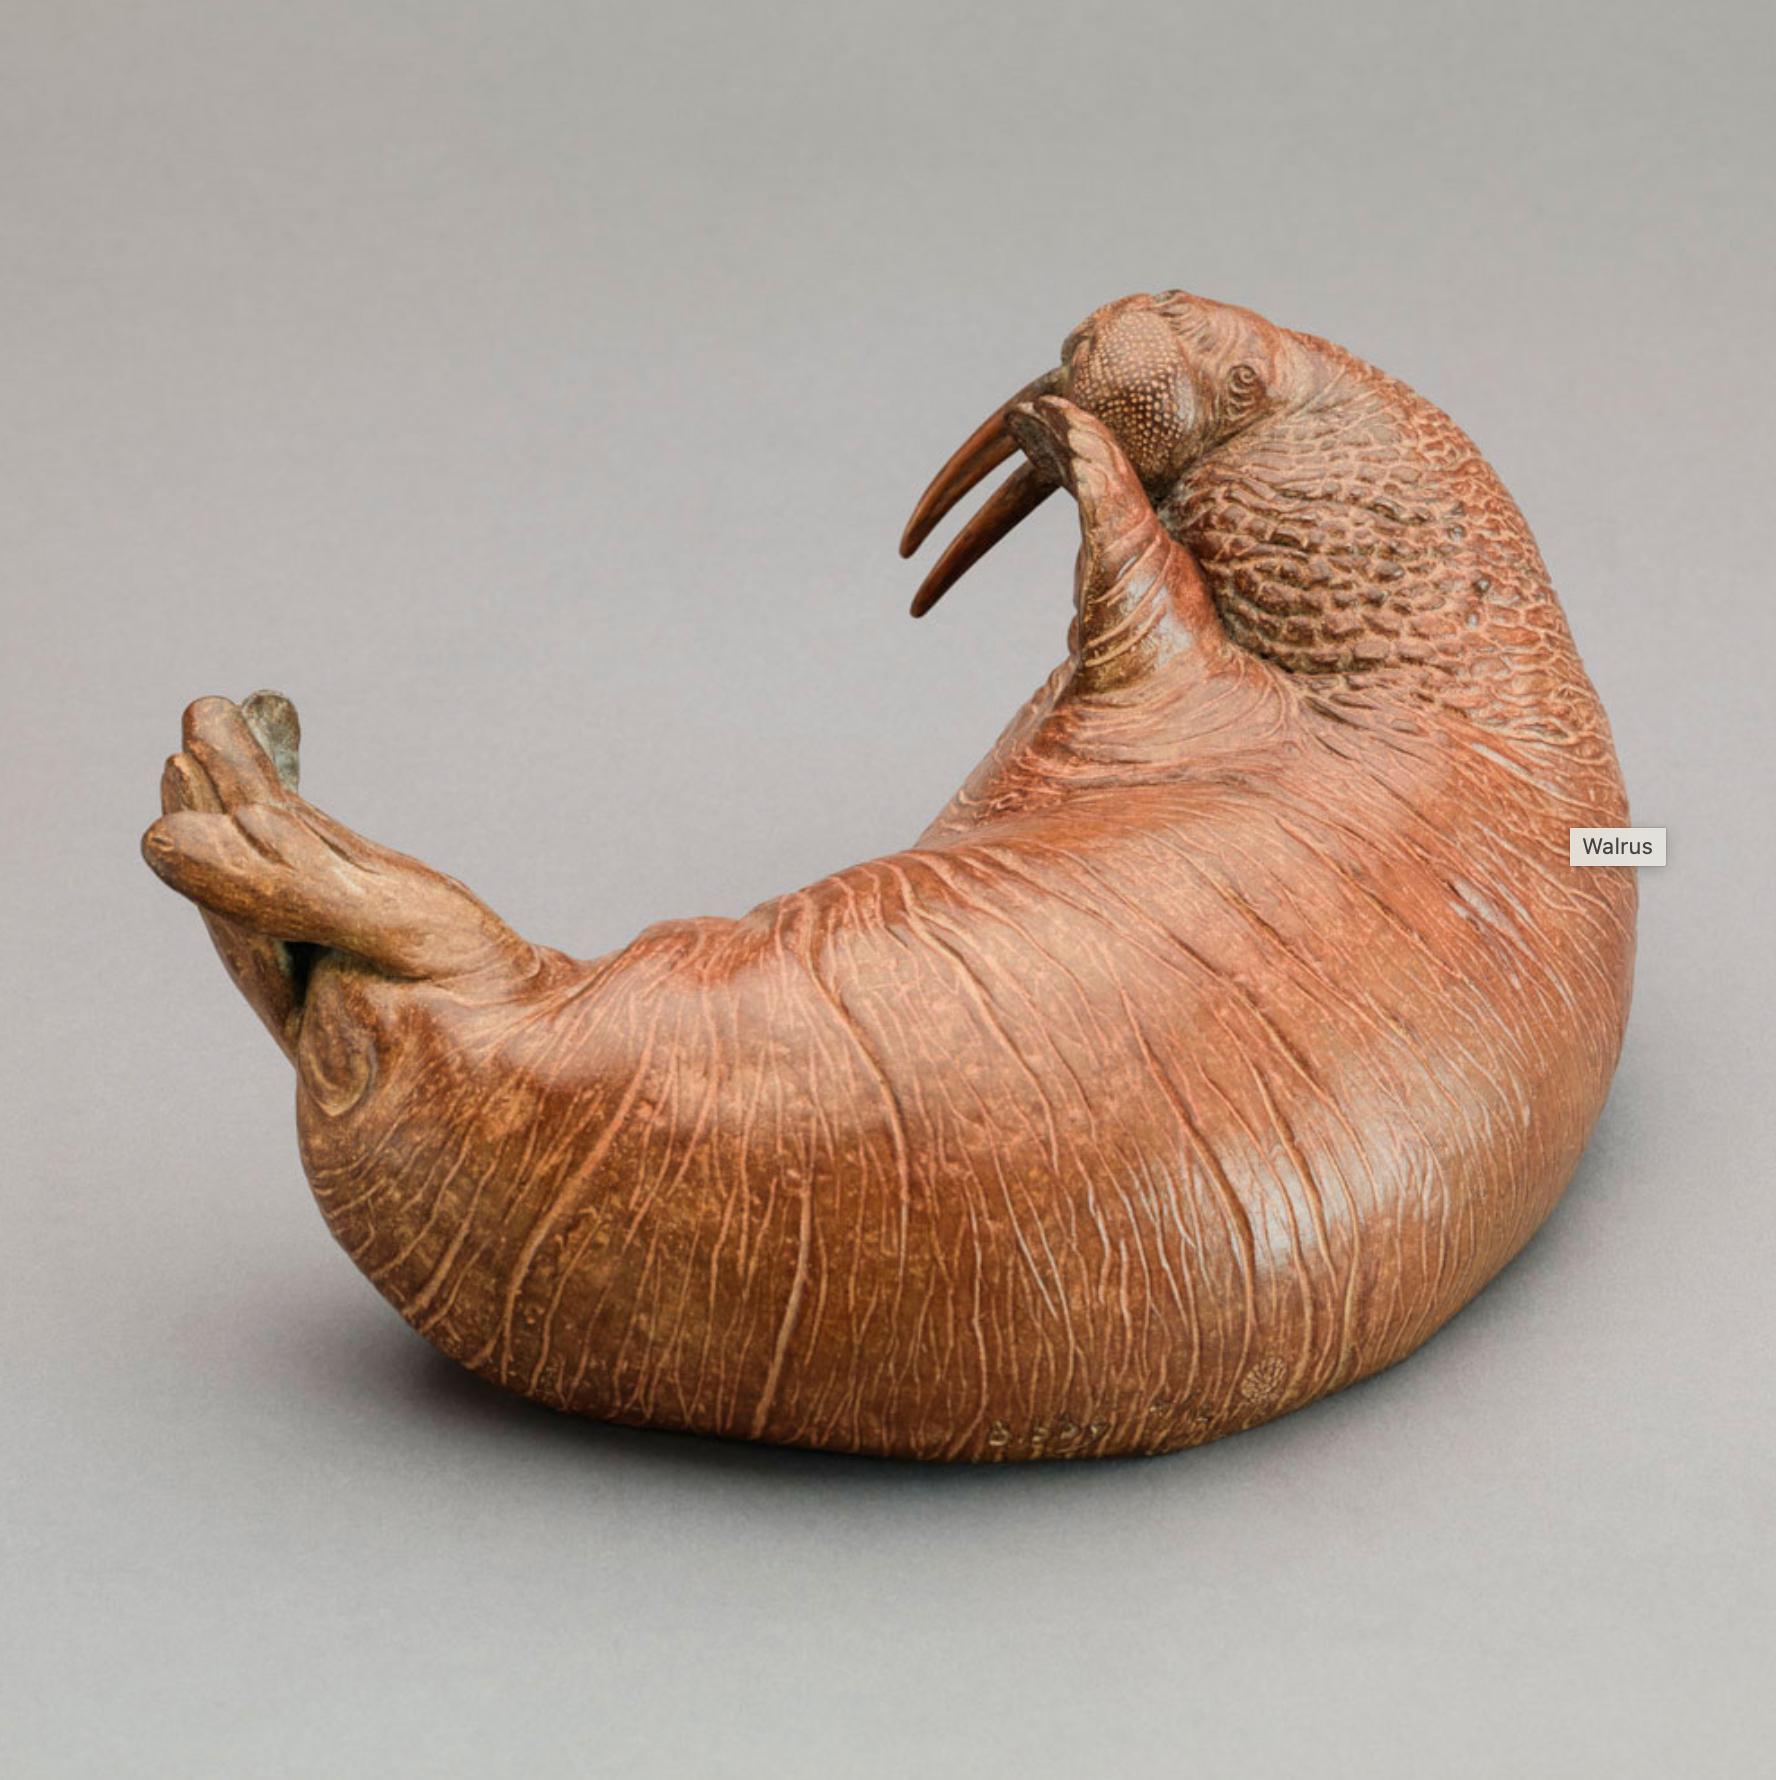 Walrus - Sculpture by Nick Bibby